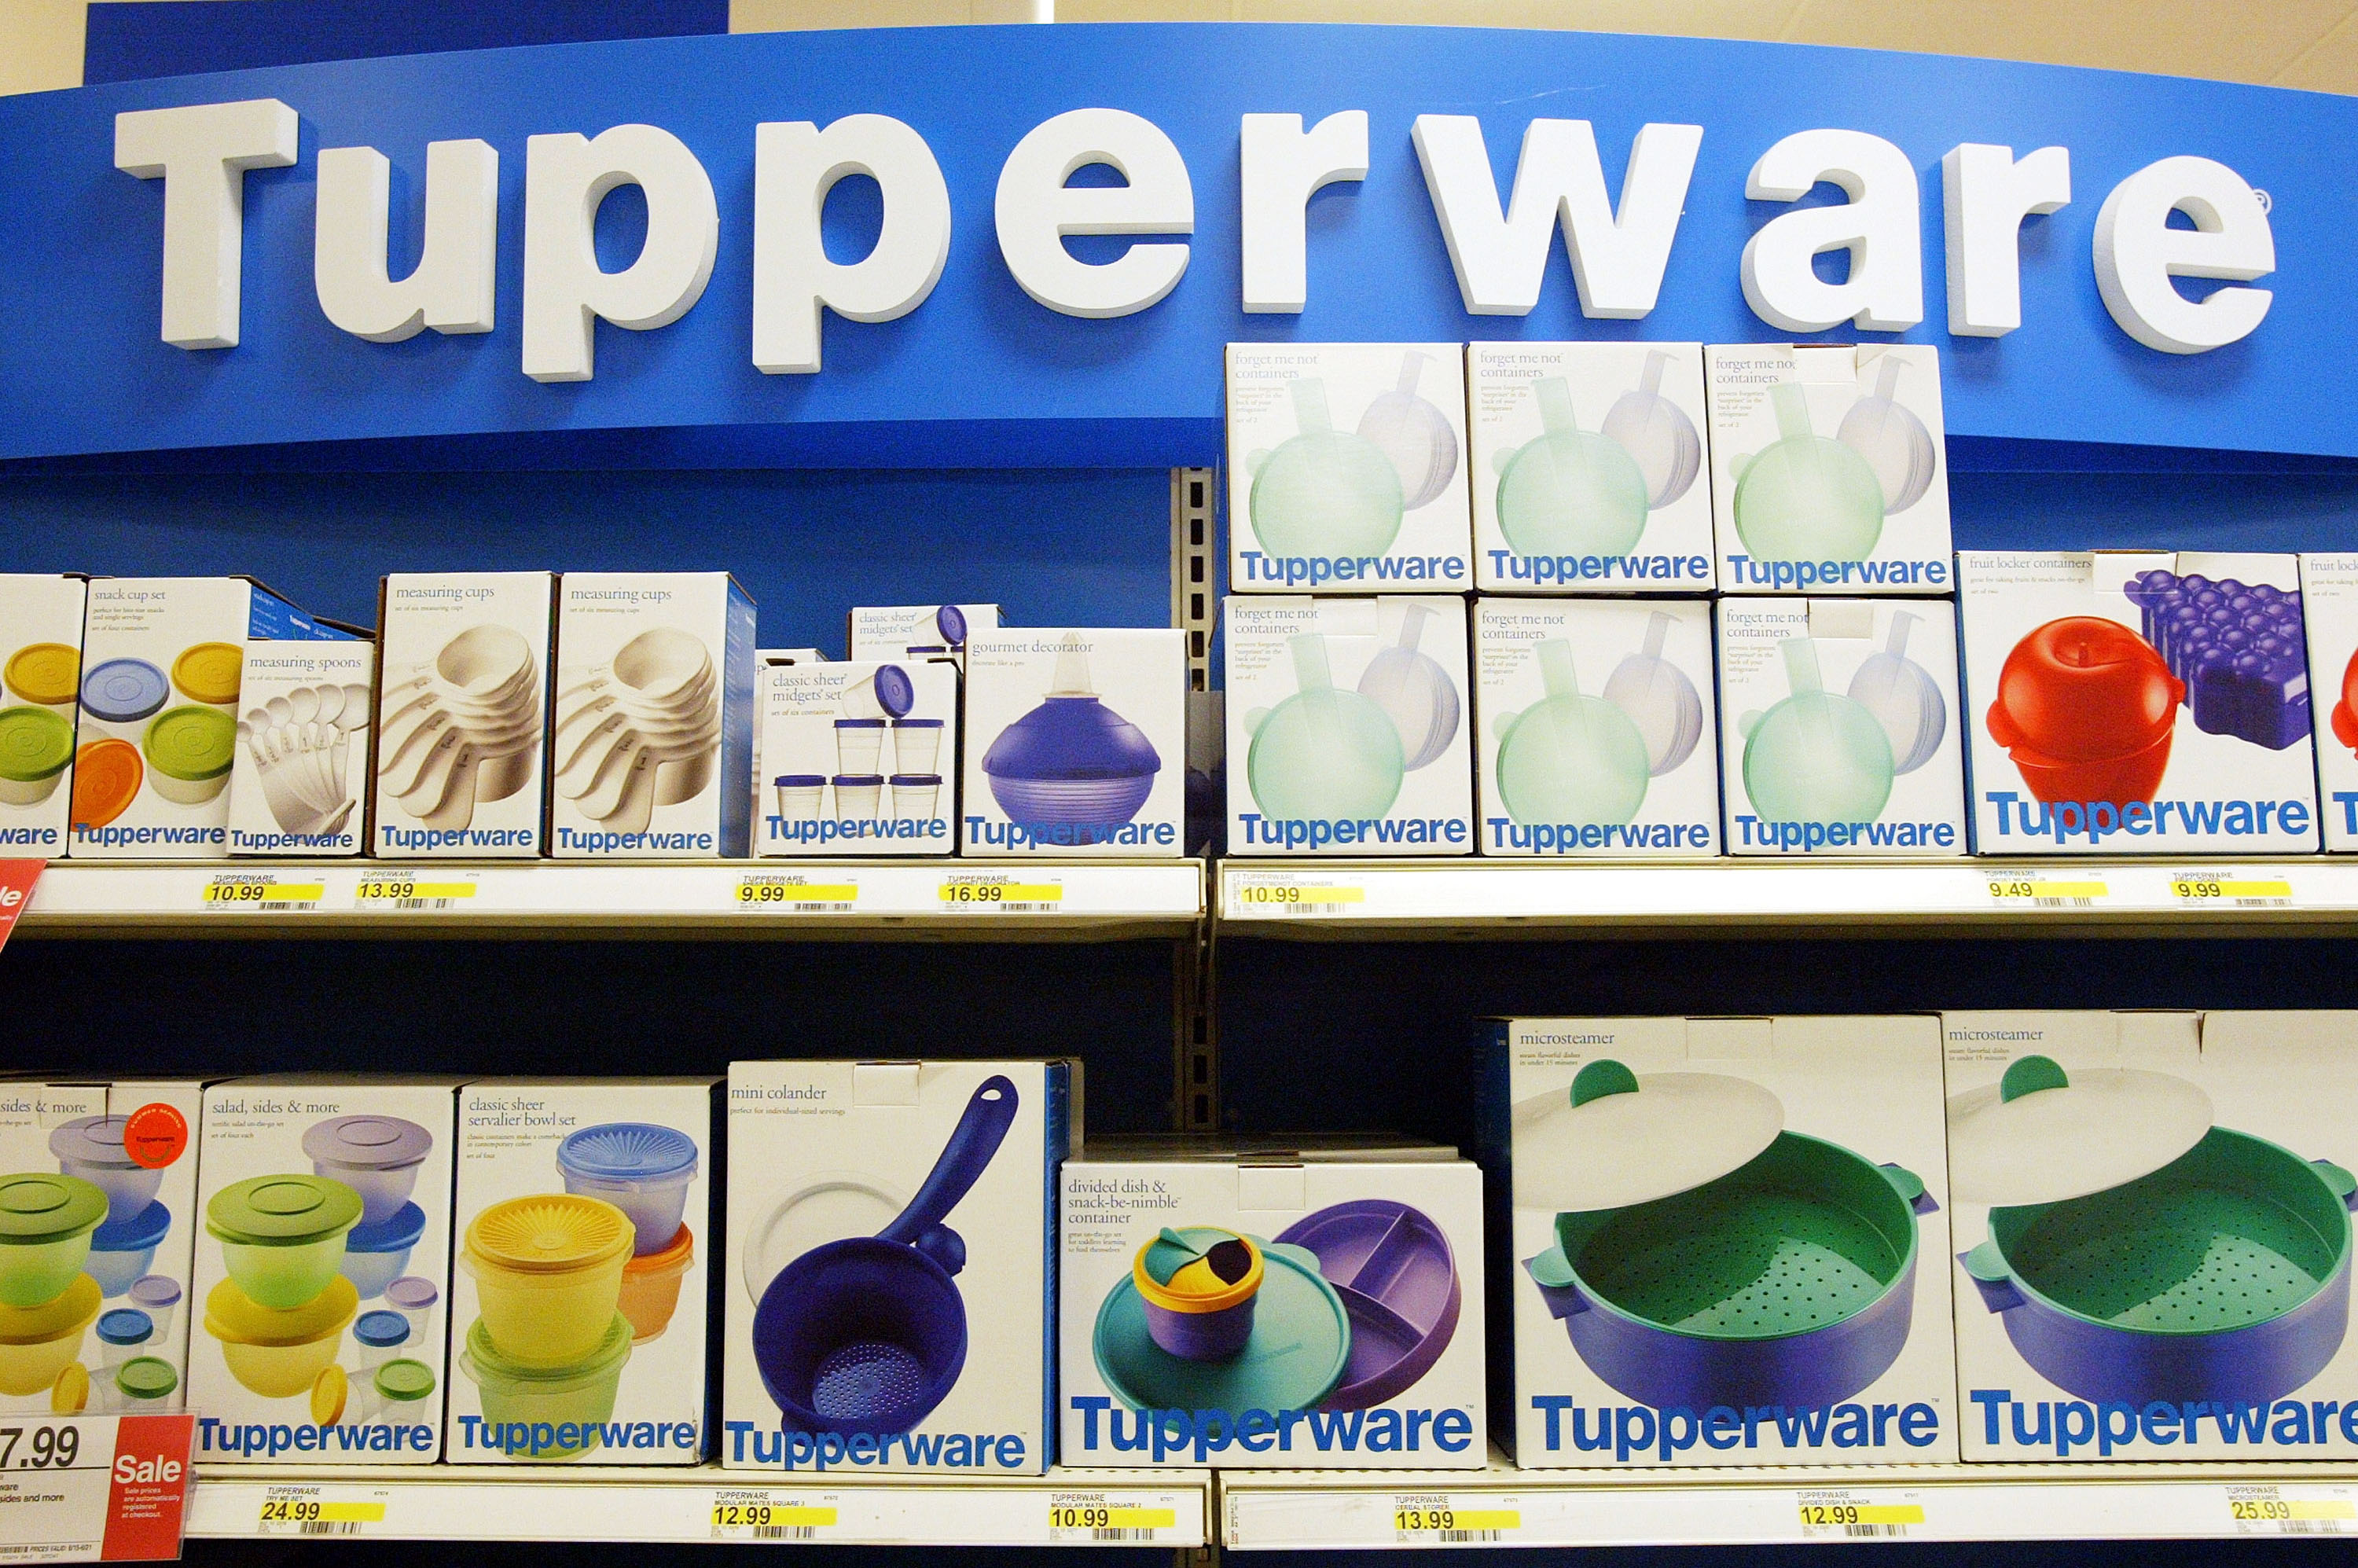 Tupperware could make a comeback, marketing experts say